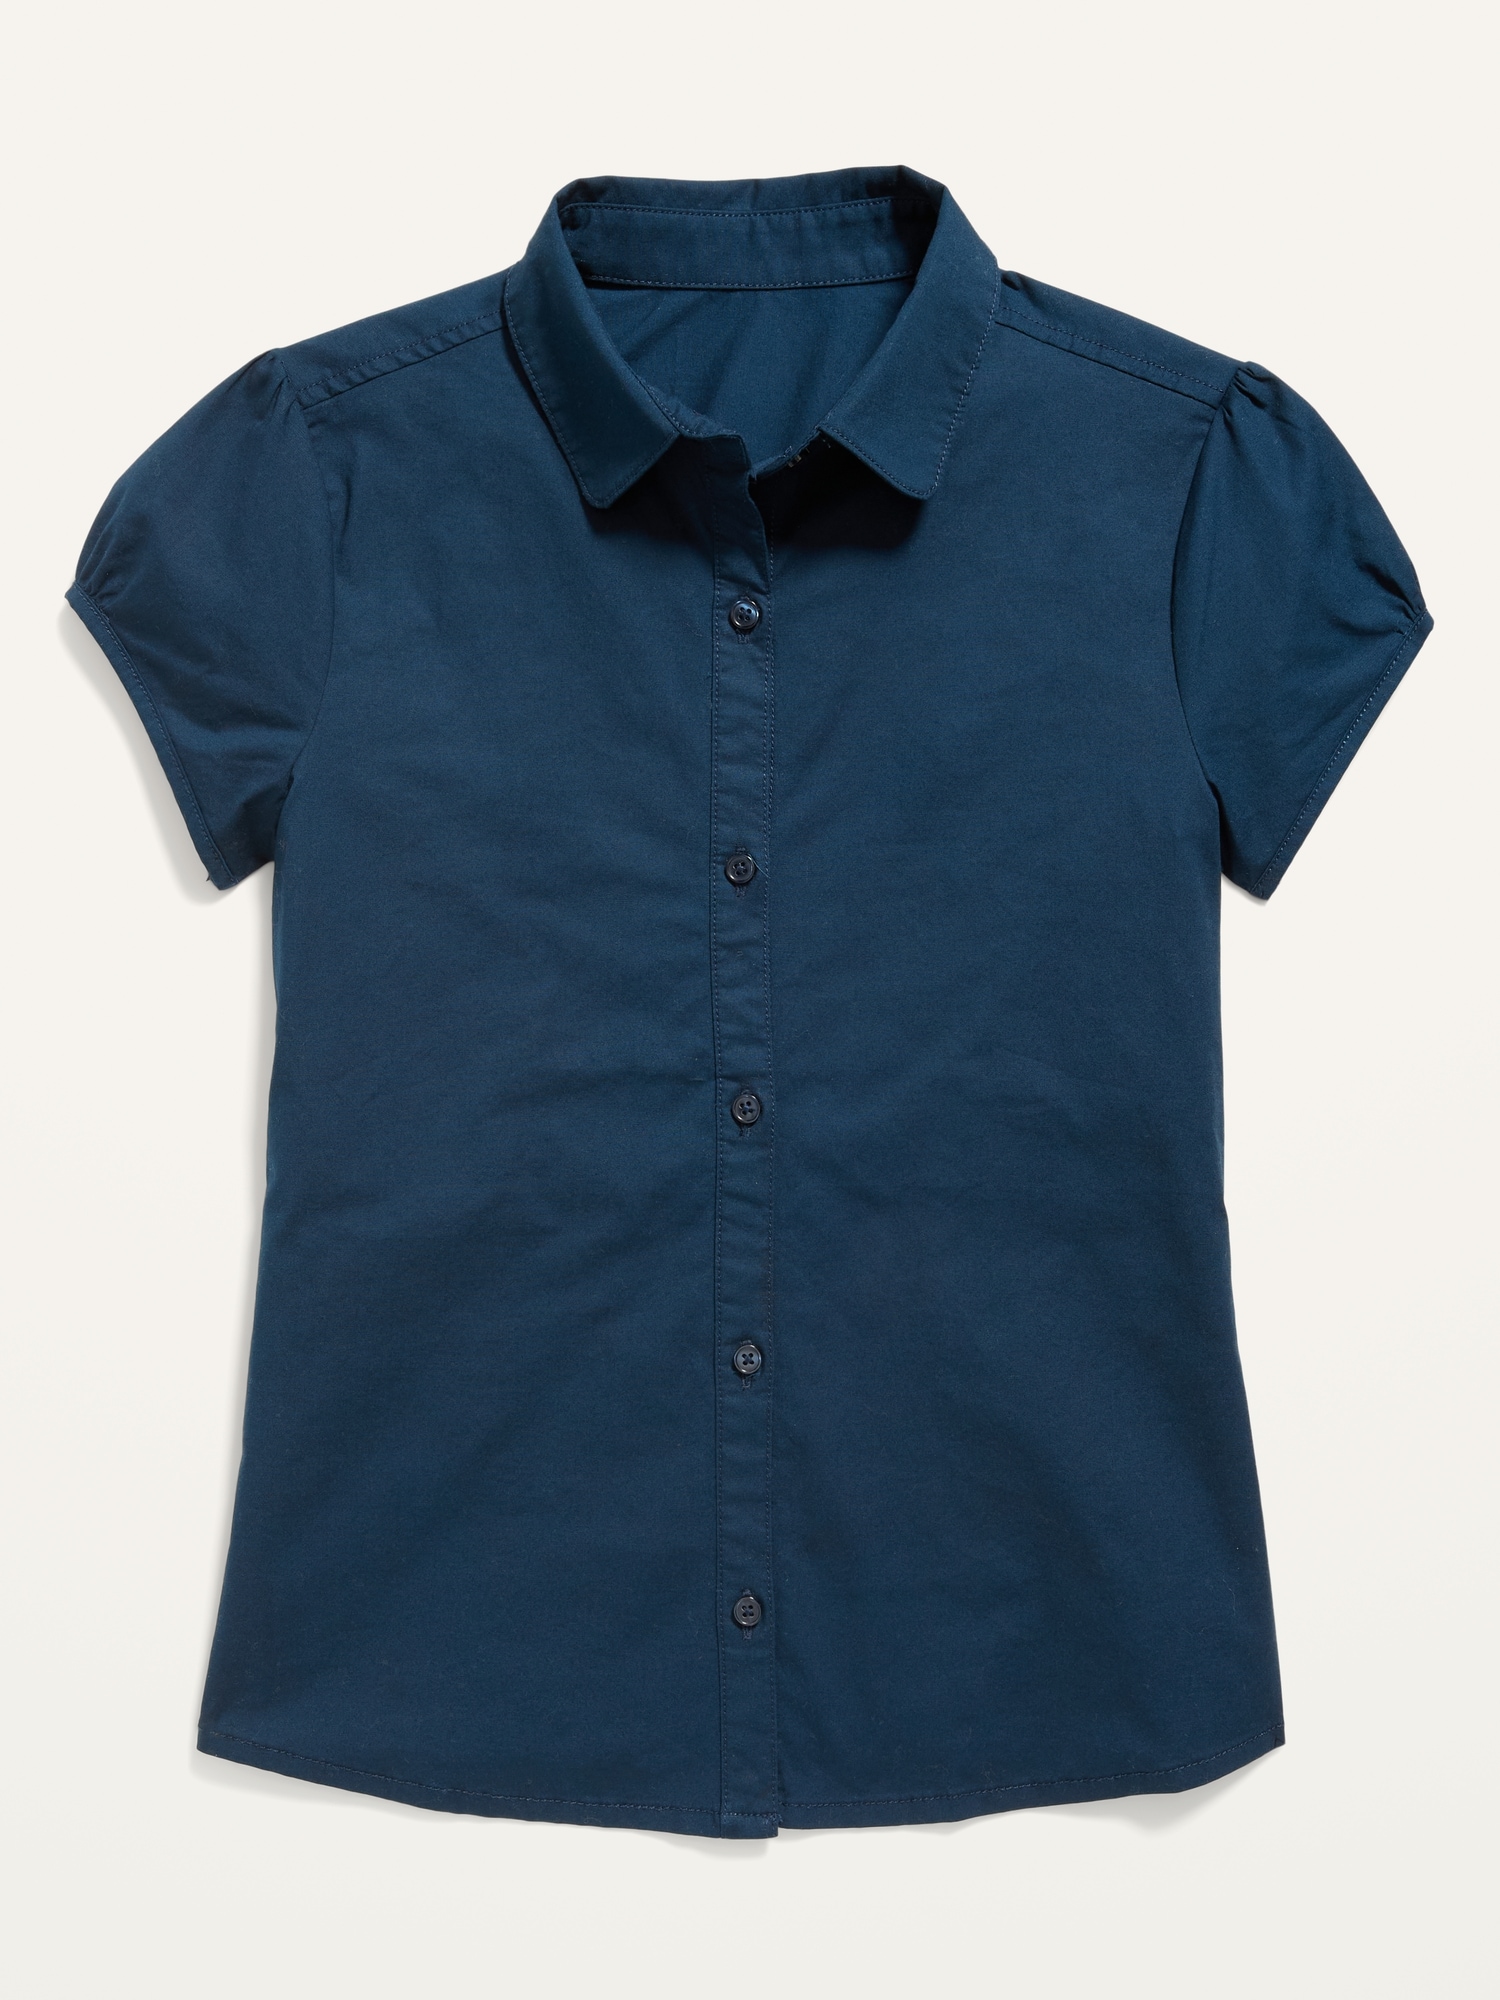 Old Navy School Uniform Short-Sleeve Shirt for Girls blue. 1